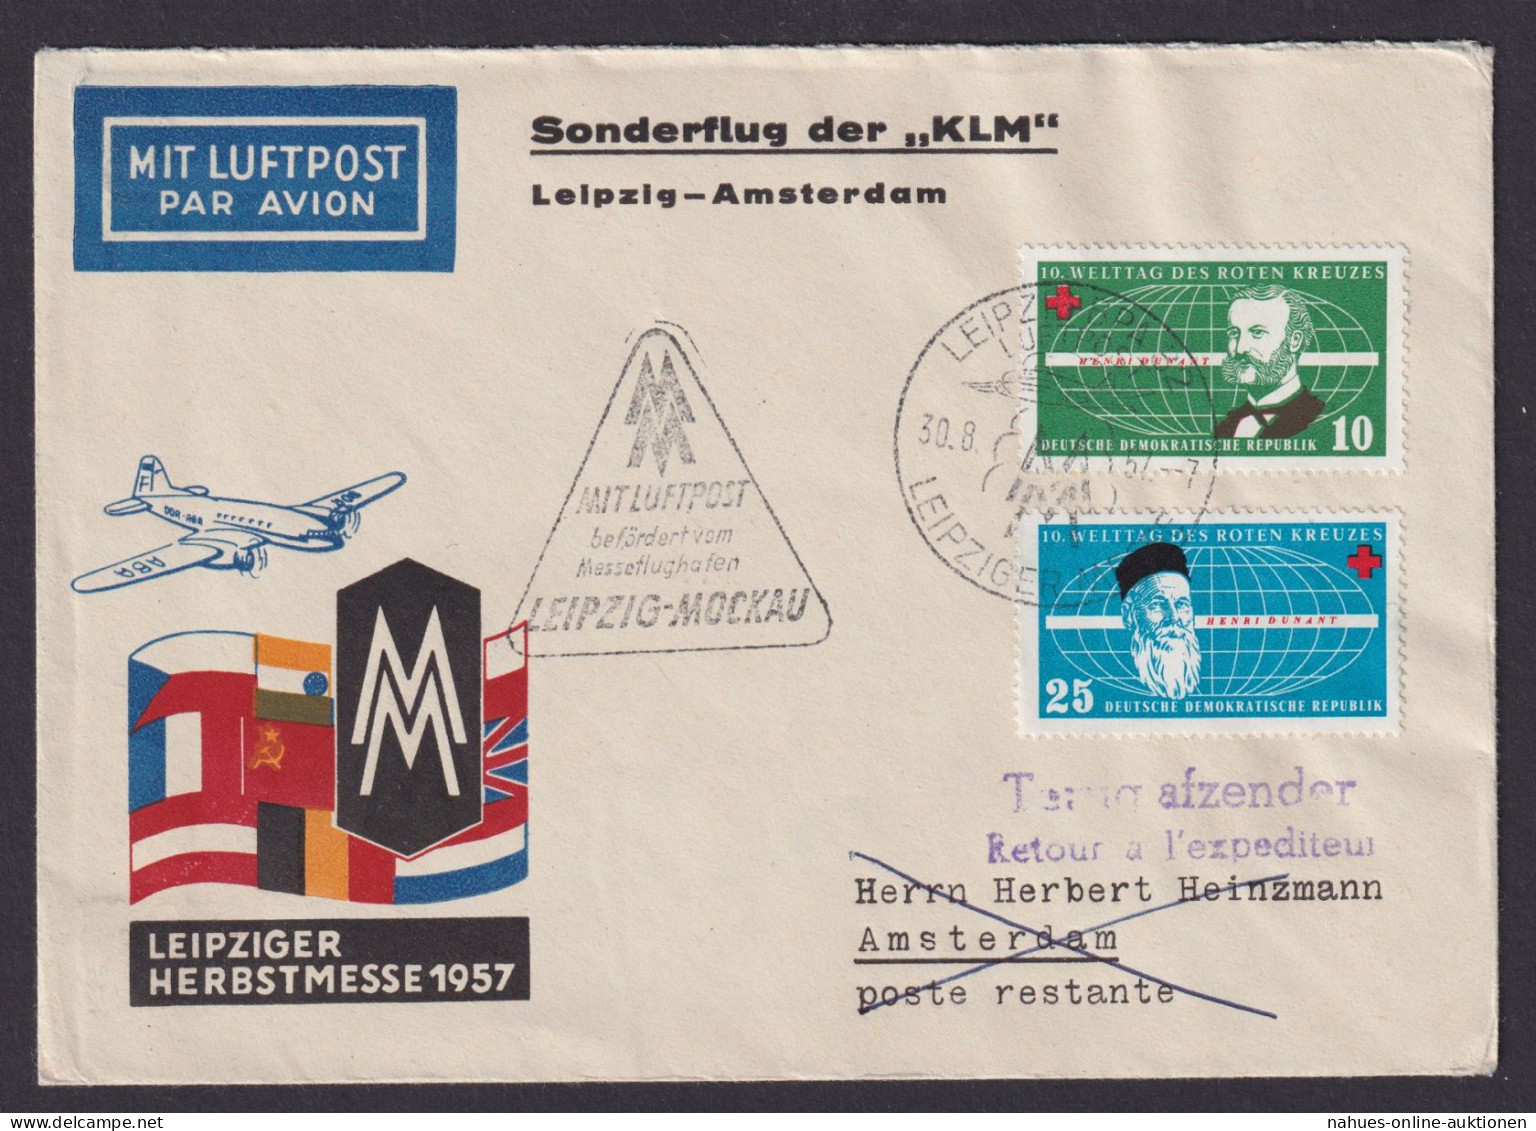 Flugpost Brief Air Mail KLM Sonderflug Leipzig Amsterdam Auf Tollem Umschlag - Covers & Documents